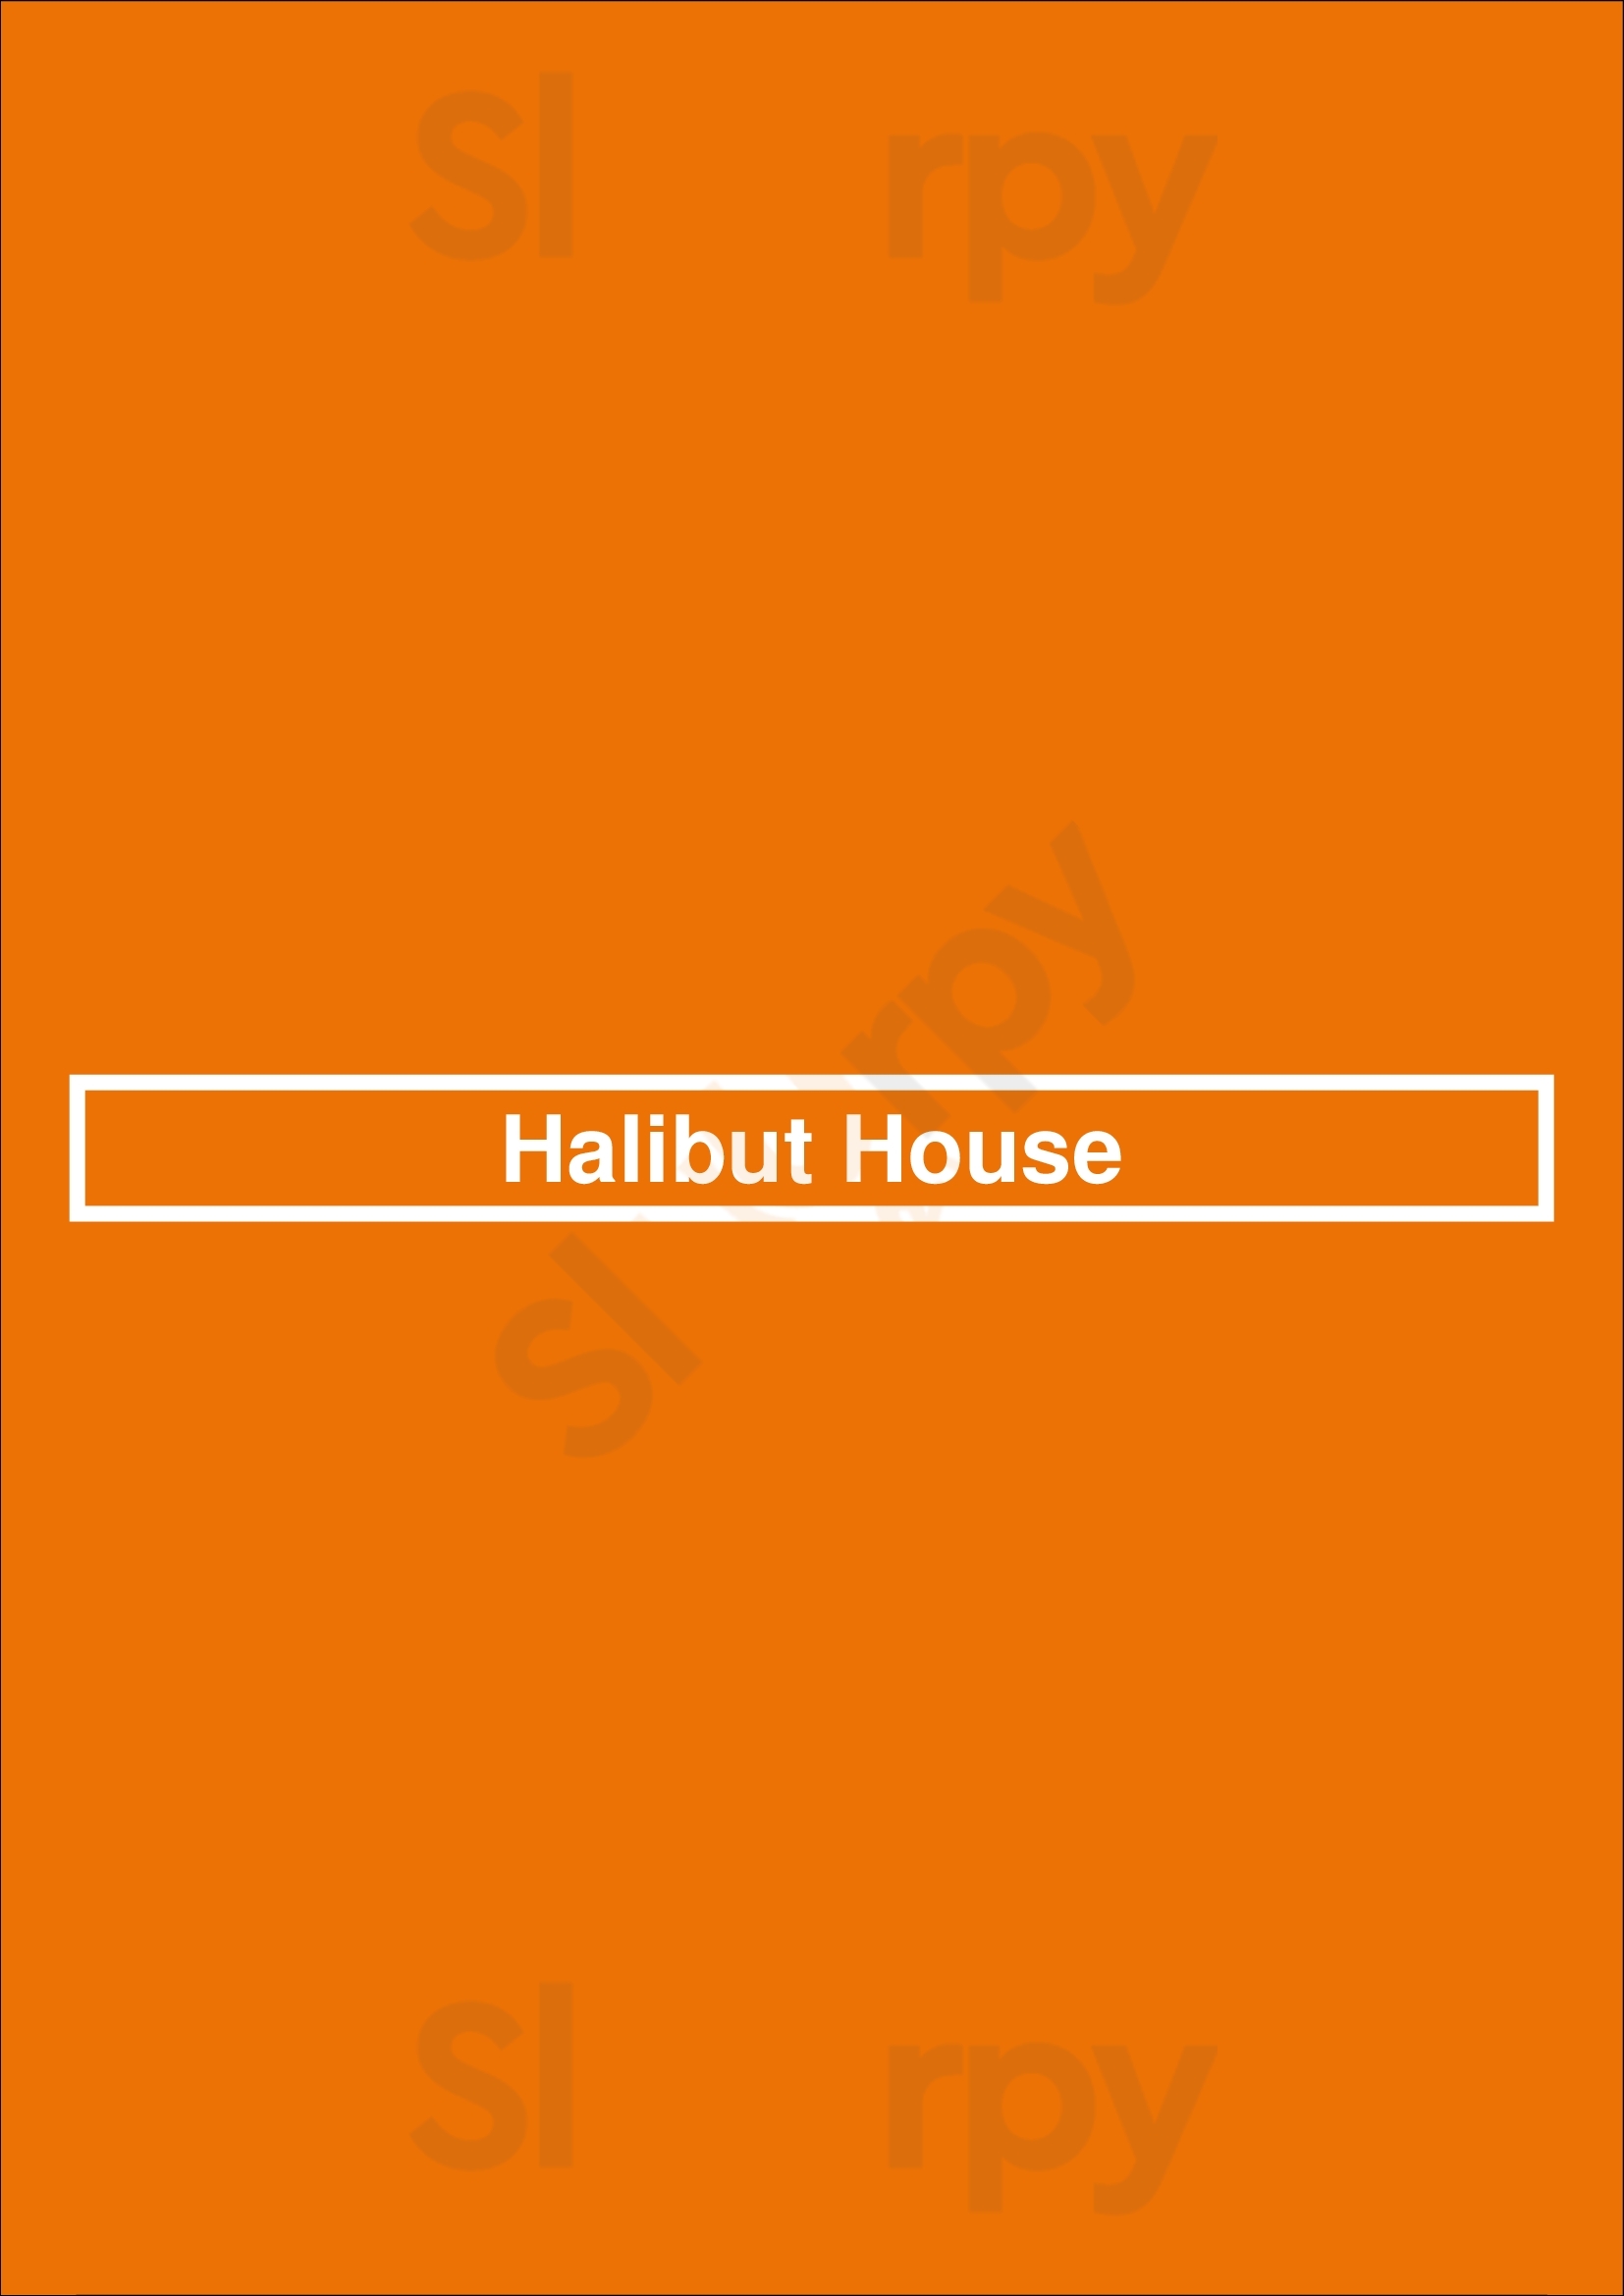 Halibut House Thornhill Menu - 1